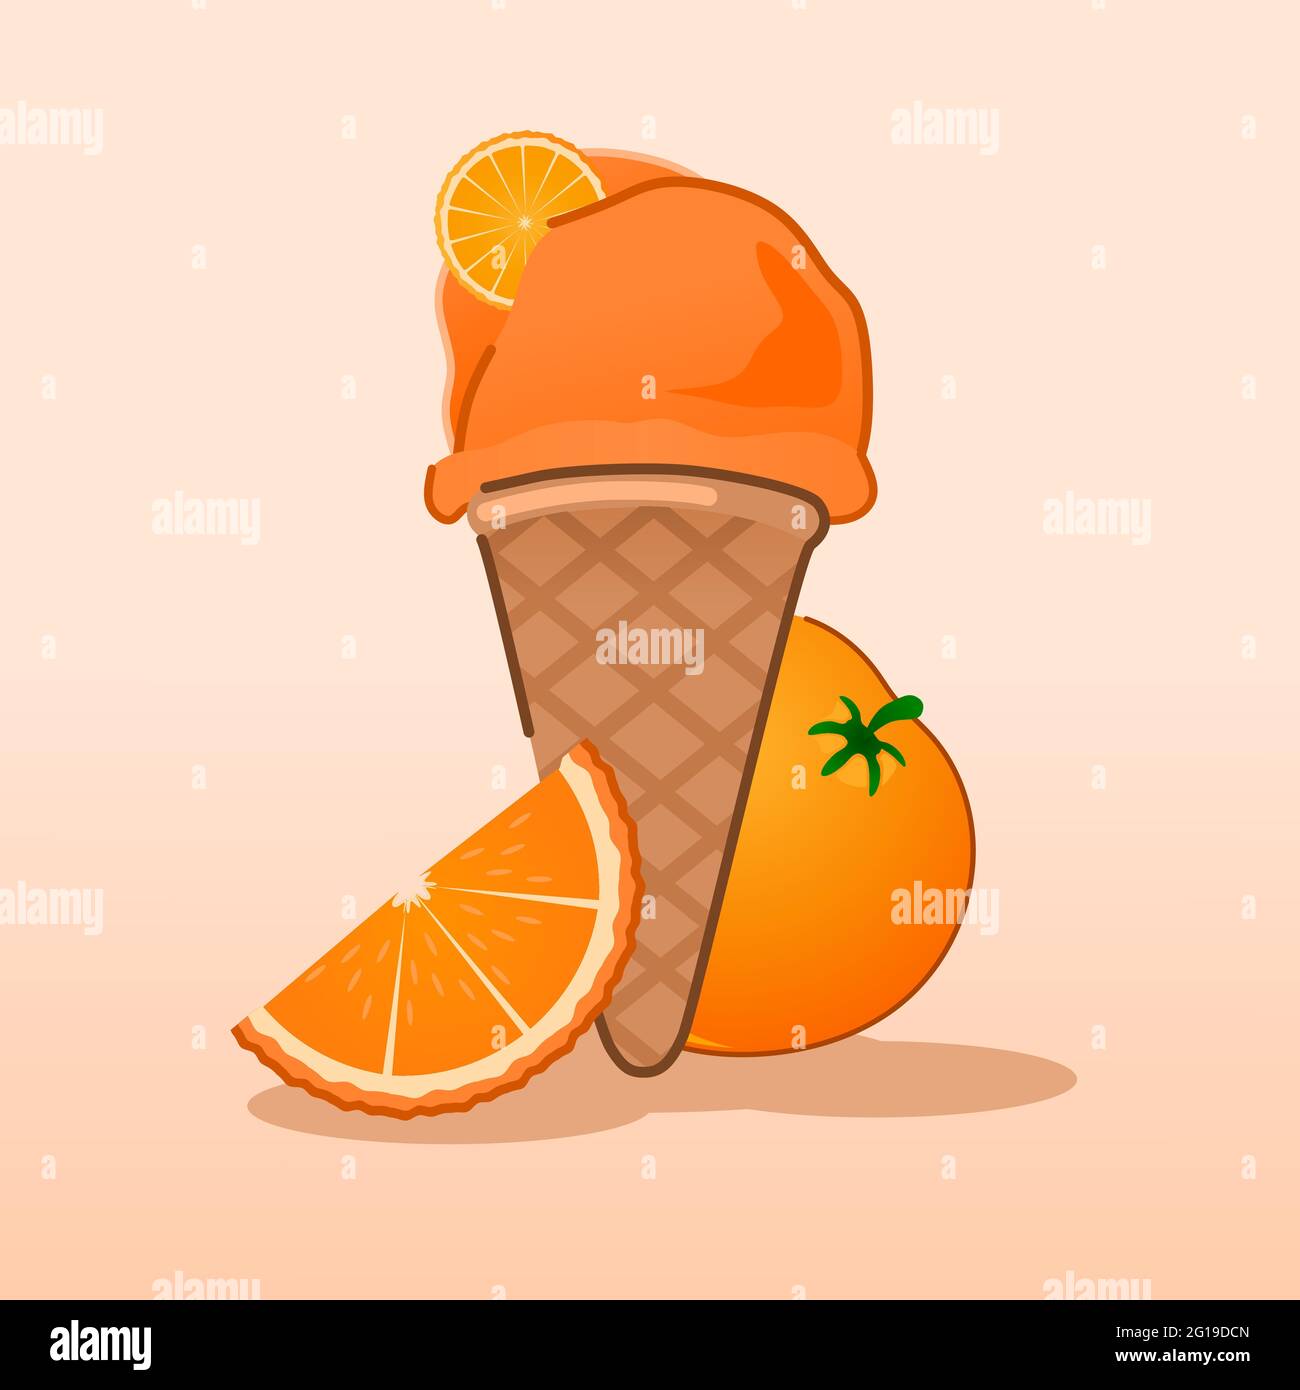 Vektor für orangene Eiscreme-Illustrationen Stock Vektor